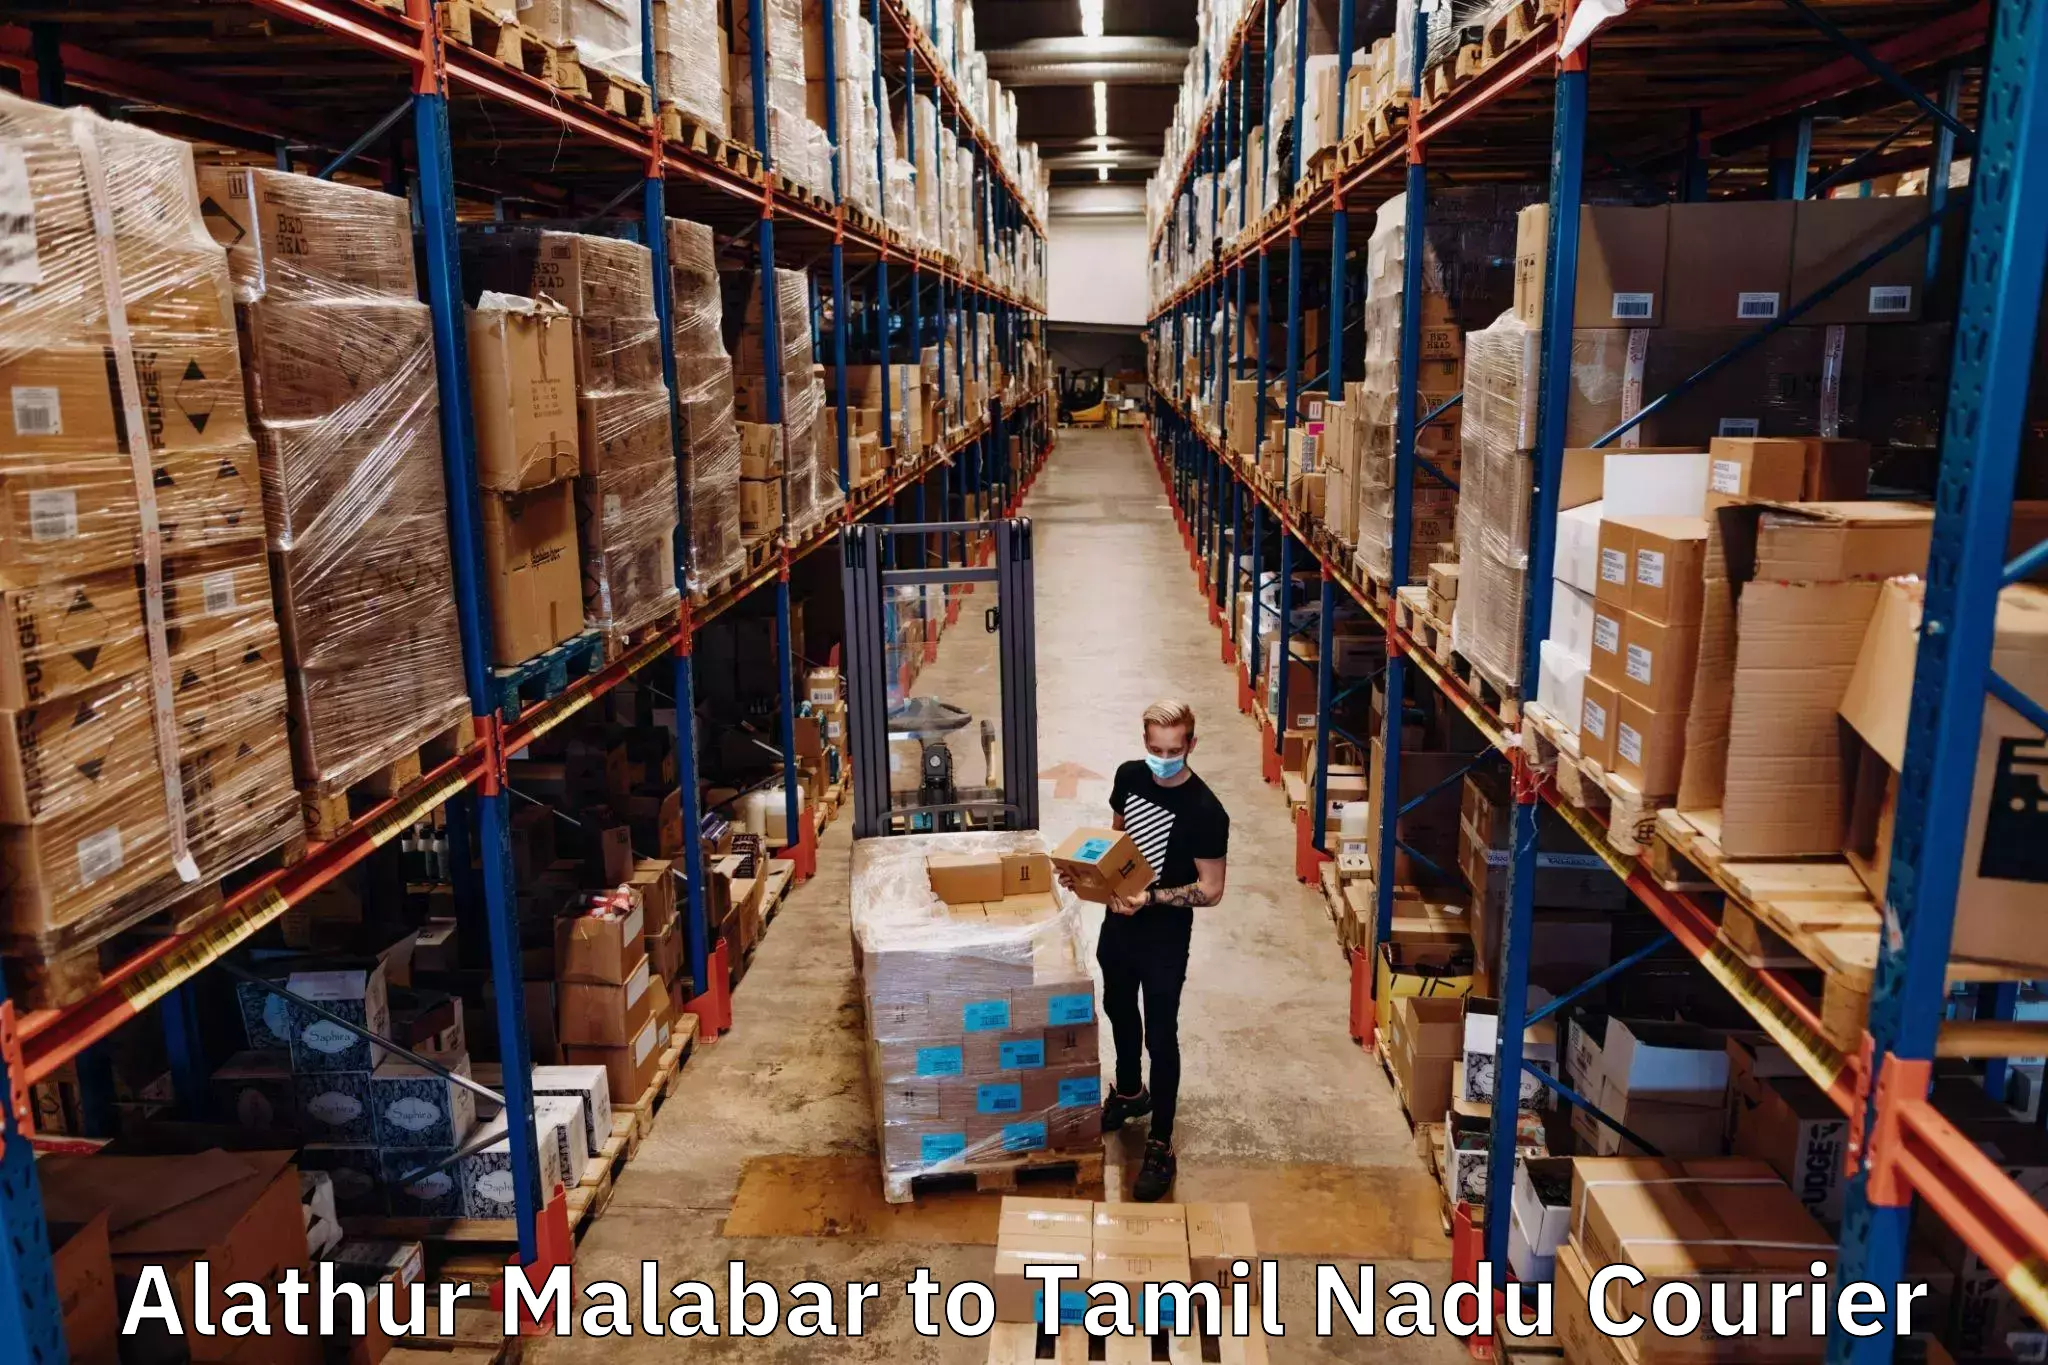 Comprehensive shipping network Alathur Malabar to Tamil Nadu